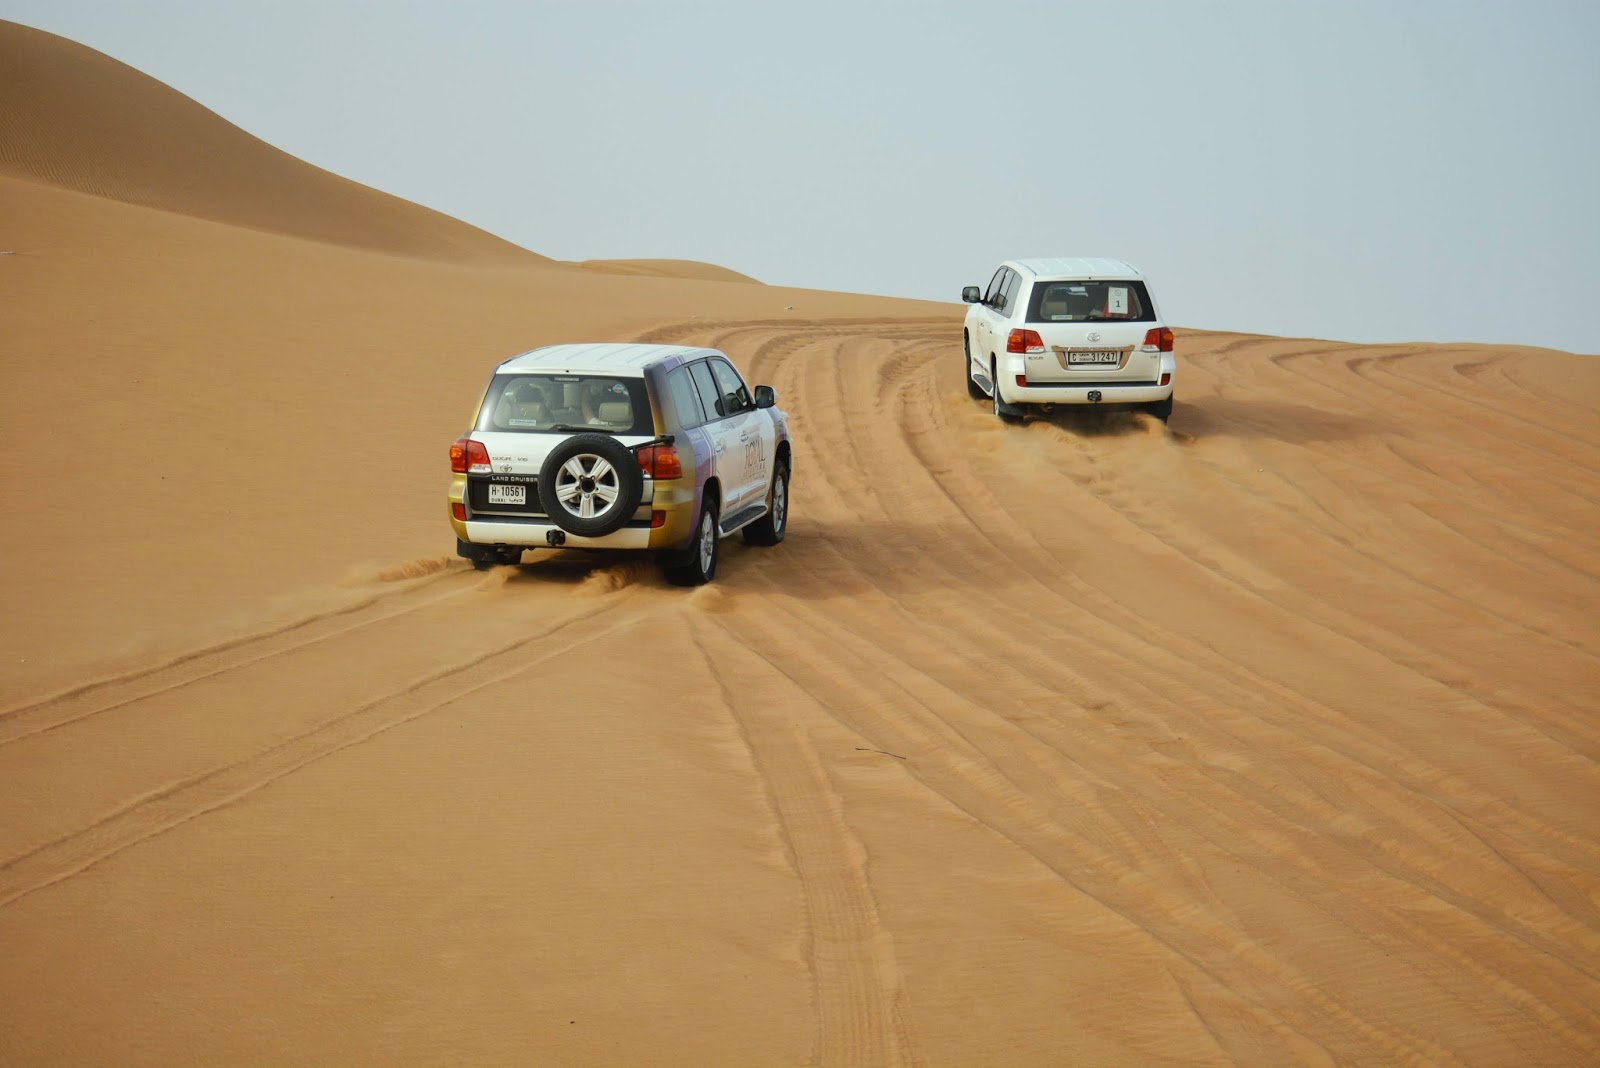 Dubai Desert Safari Experience